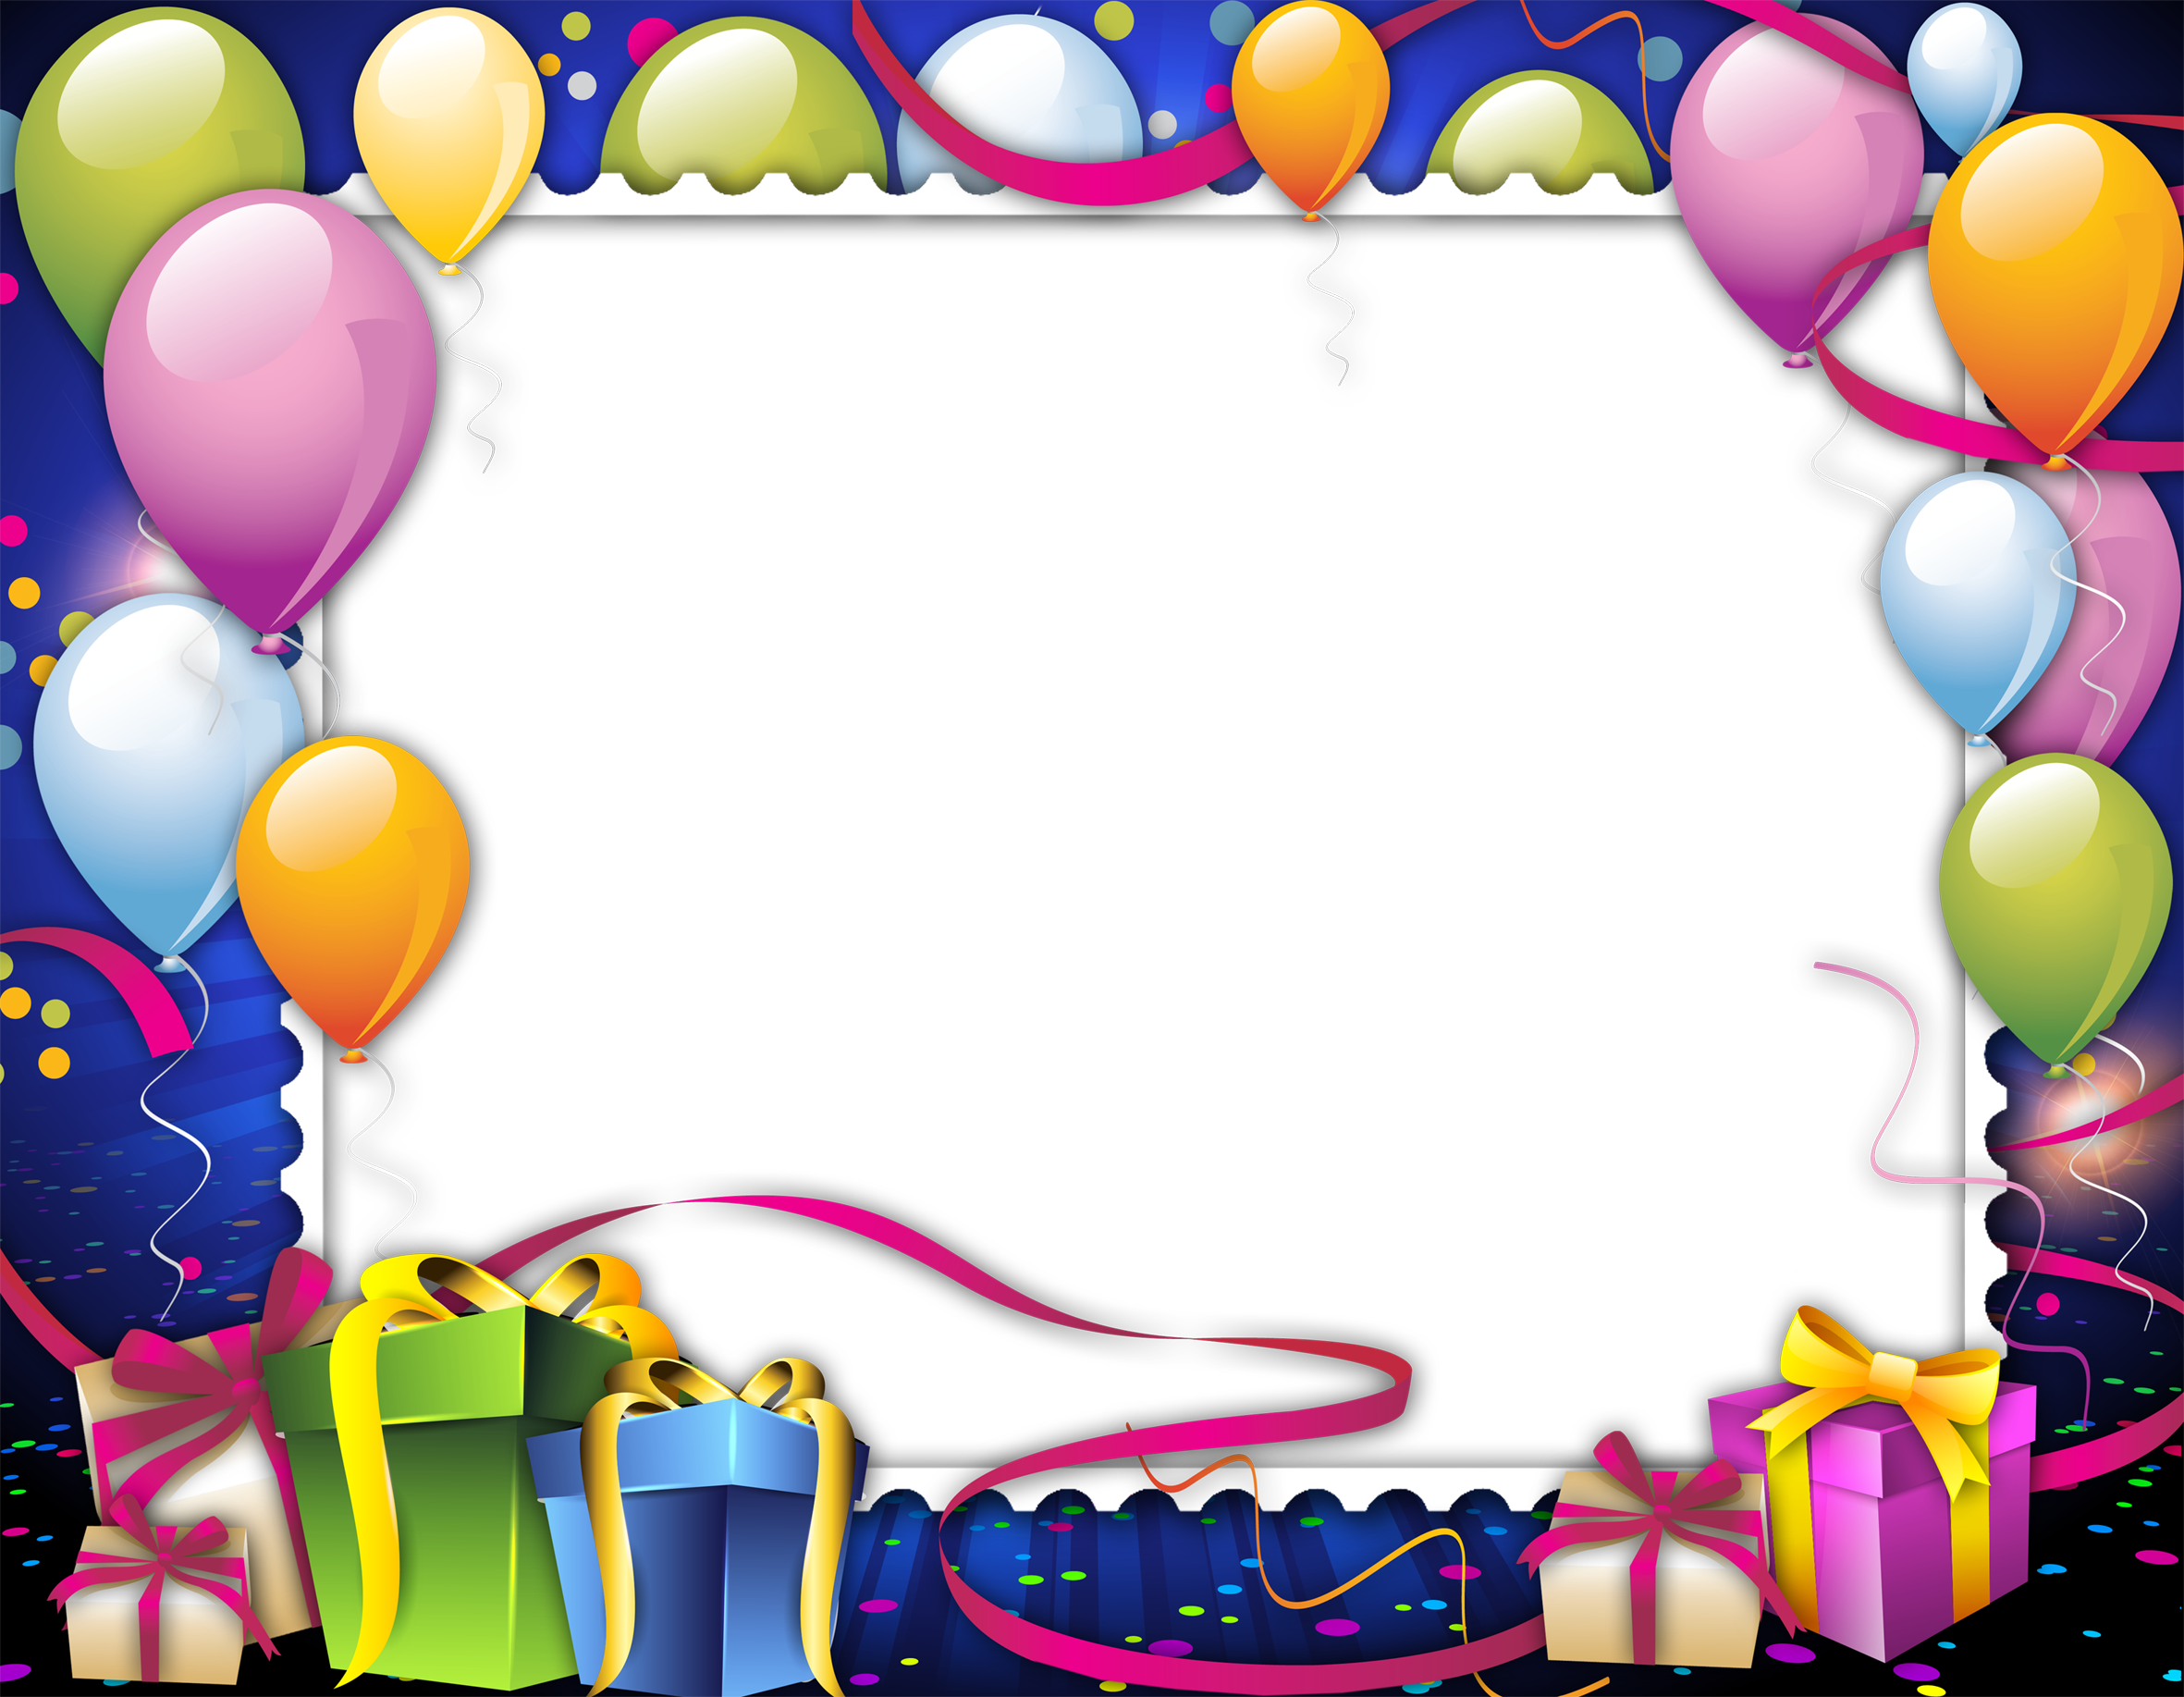 Birthday Frame Download PNG Image